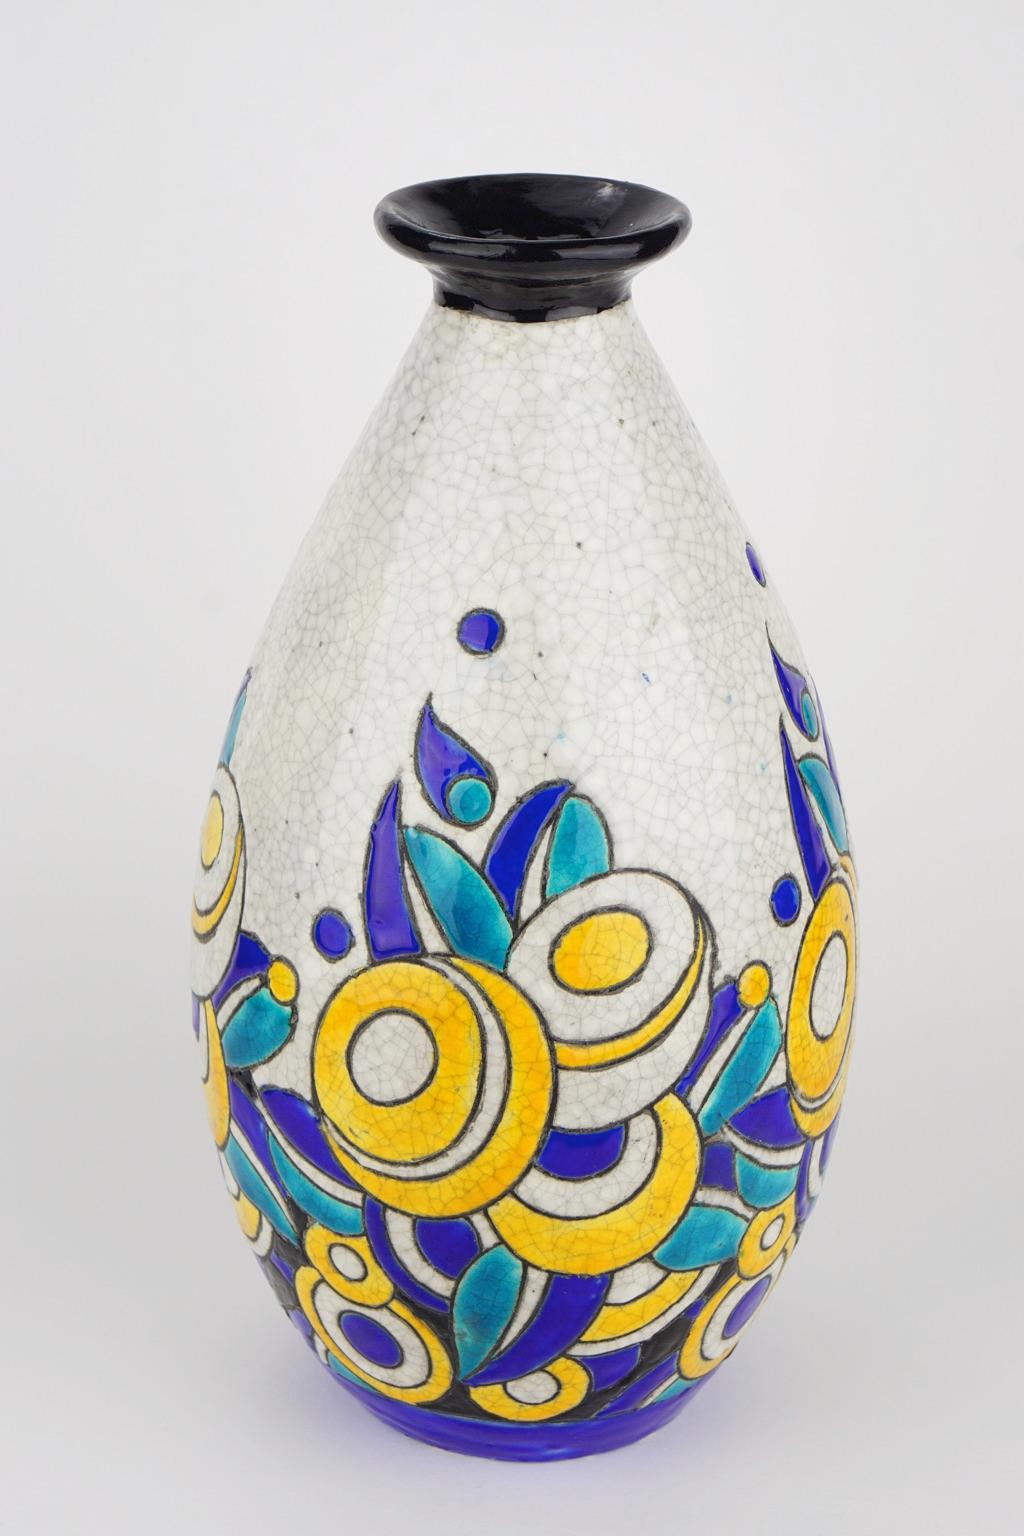 Art Deco Keramis Boch crackled enameled earthenware vase with geometric flower pattern. Marks D1175 and F960.
Size: Height 32 cm, top diameter 7.3 cm, bottom diameter 9.3 cm.